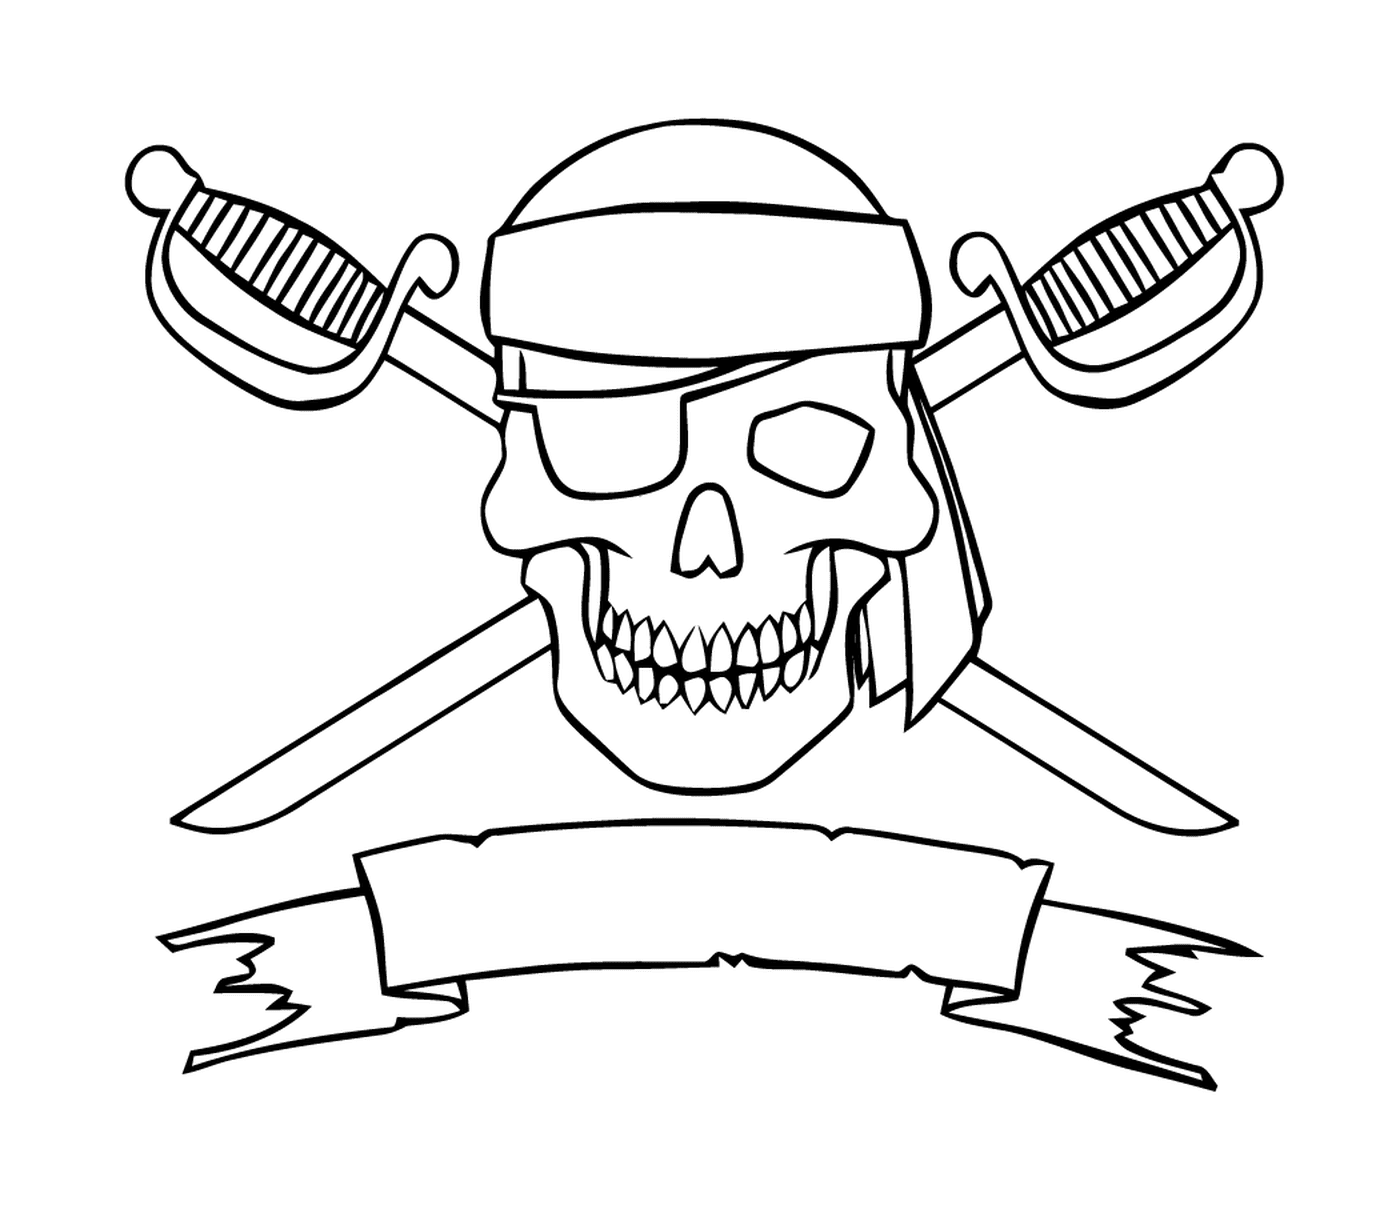  Logotipo pirata aterrador, espadas cruzadas 